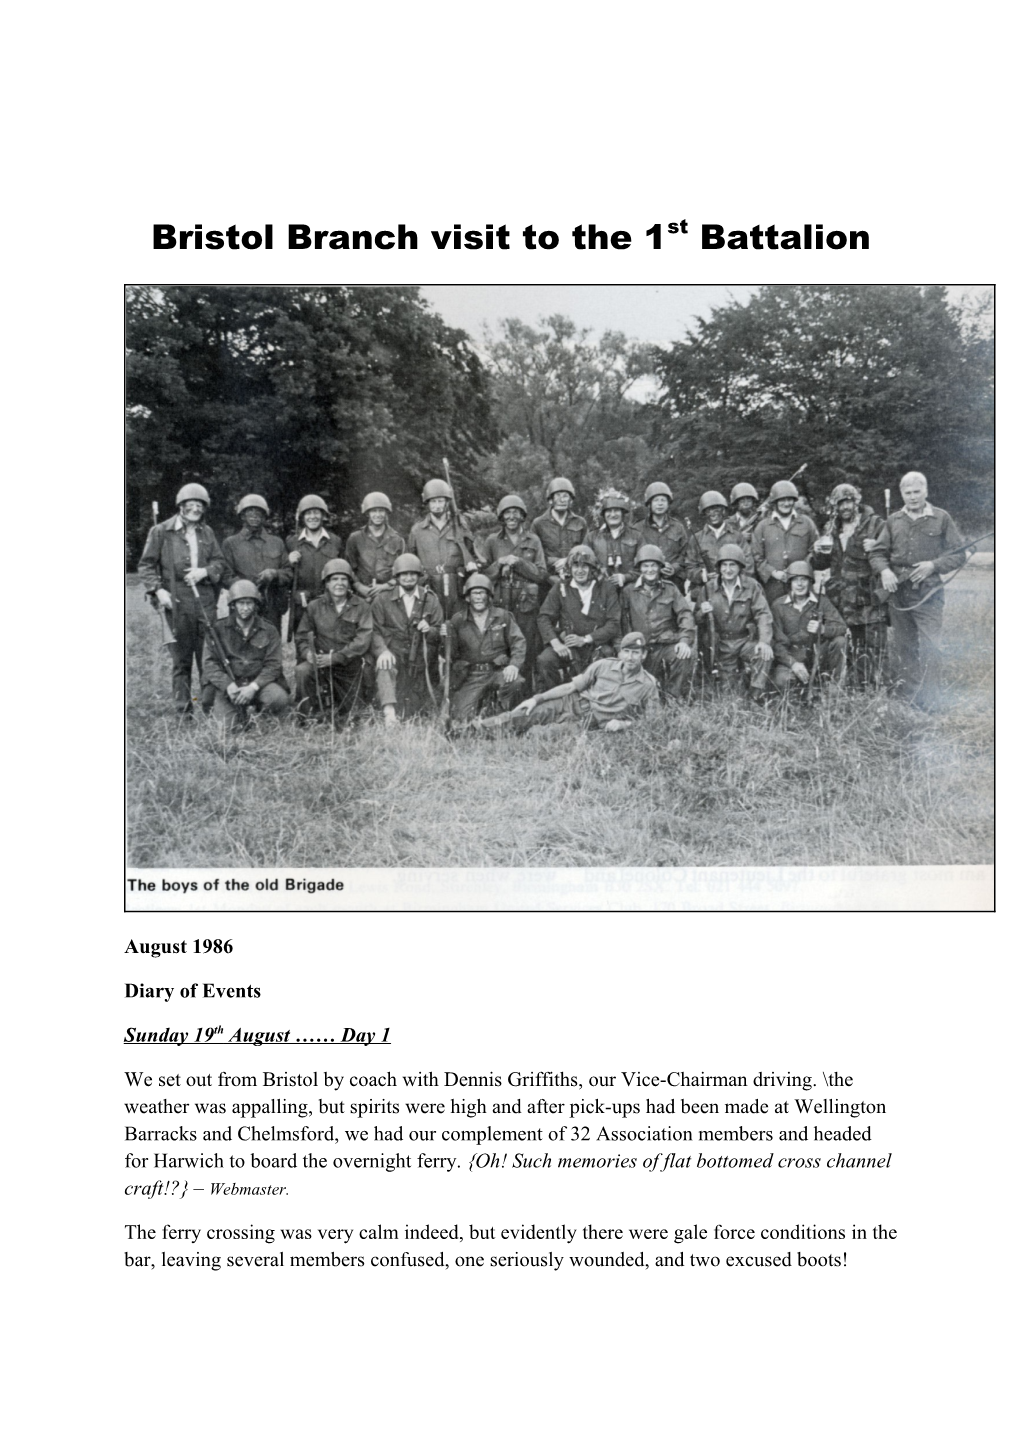 Bristol Branch Visit to the 1St Battalion